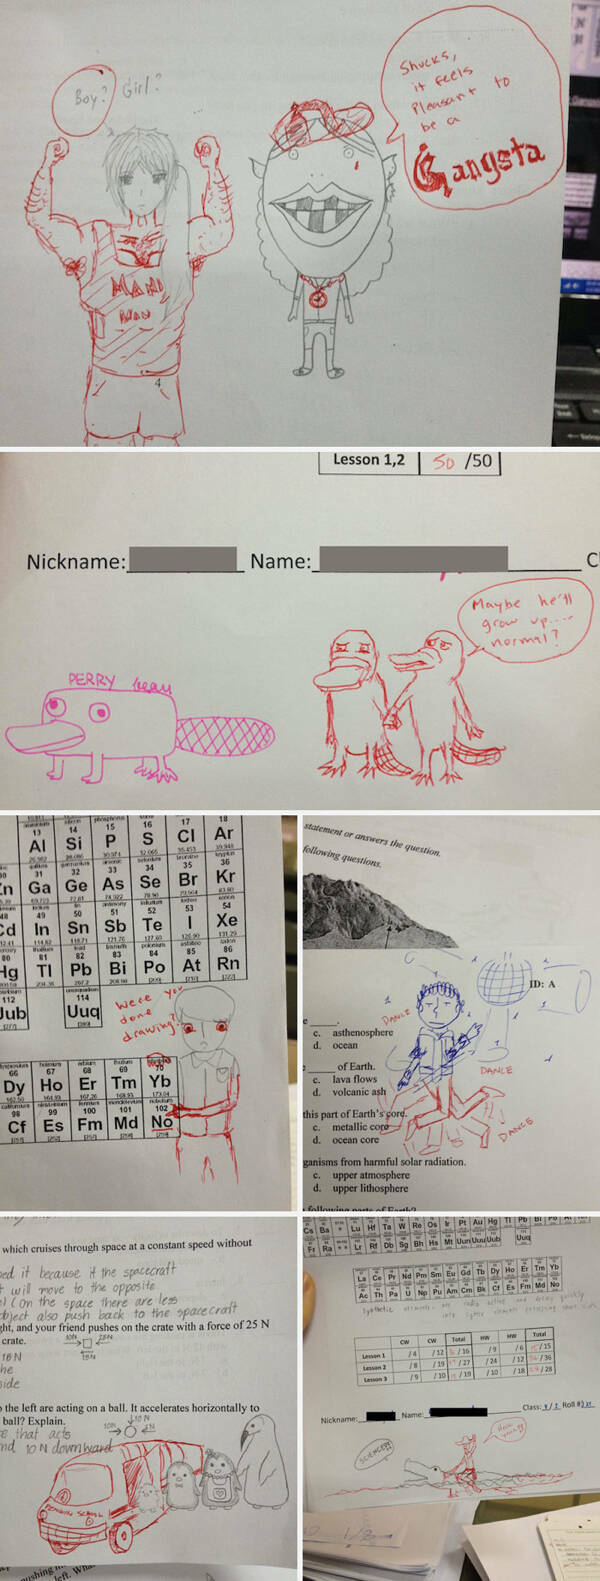 Teachers Humorous Marks On Student Tests